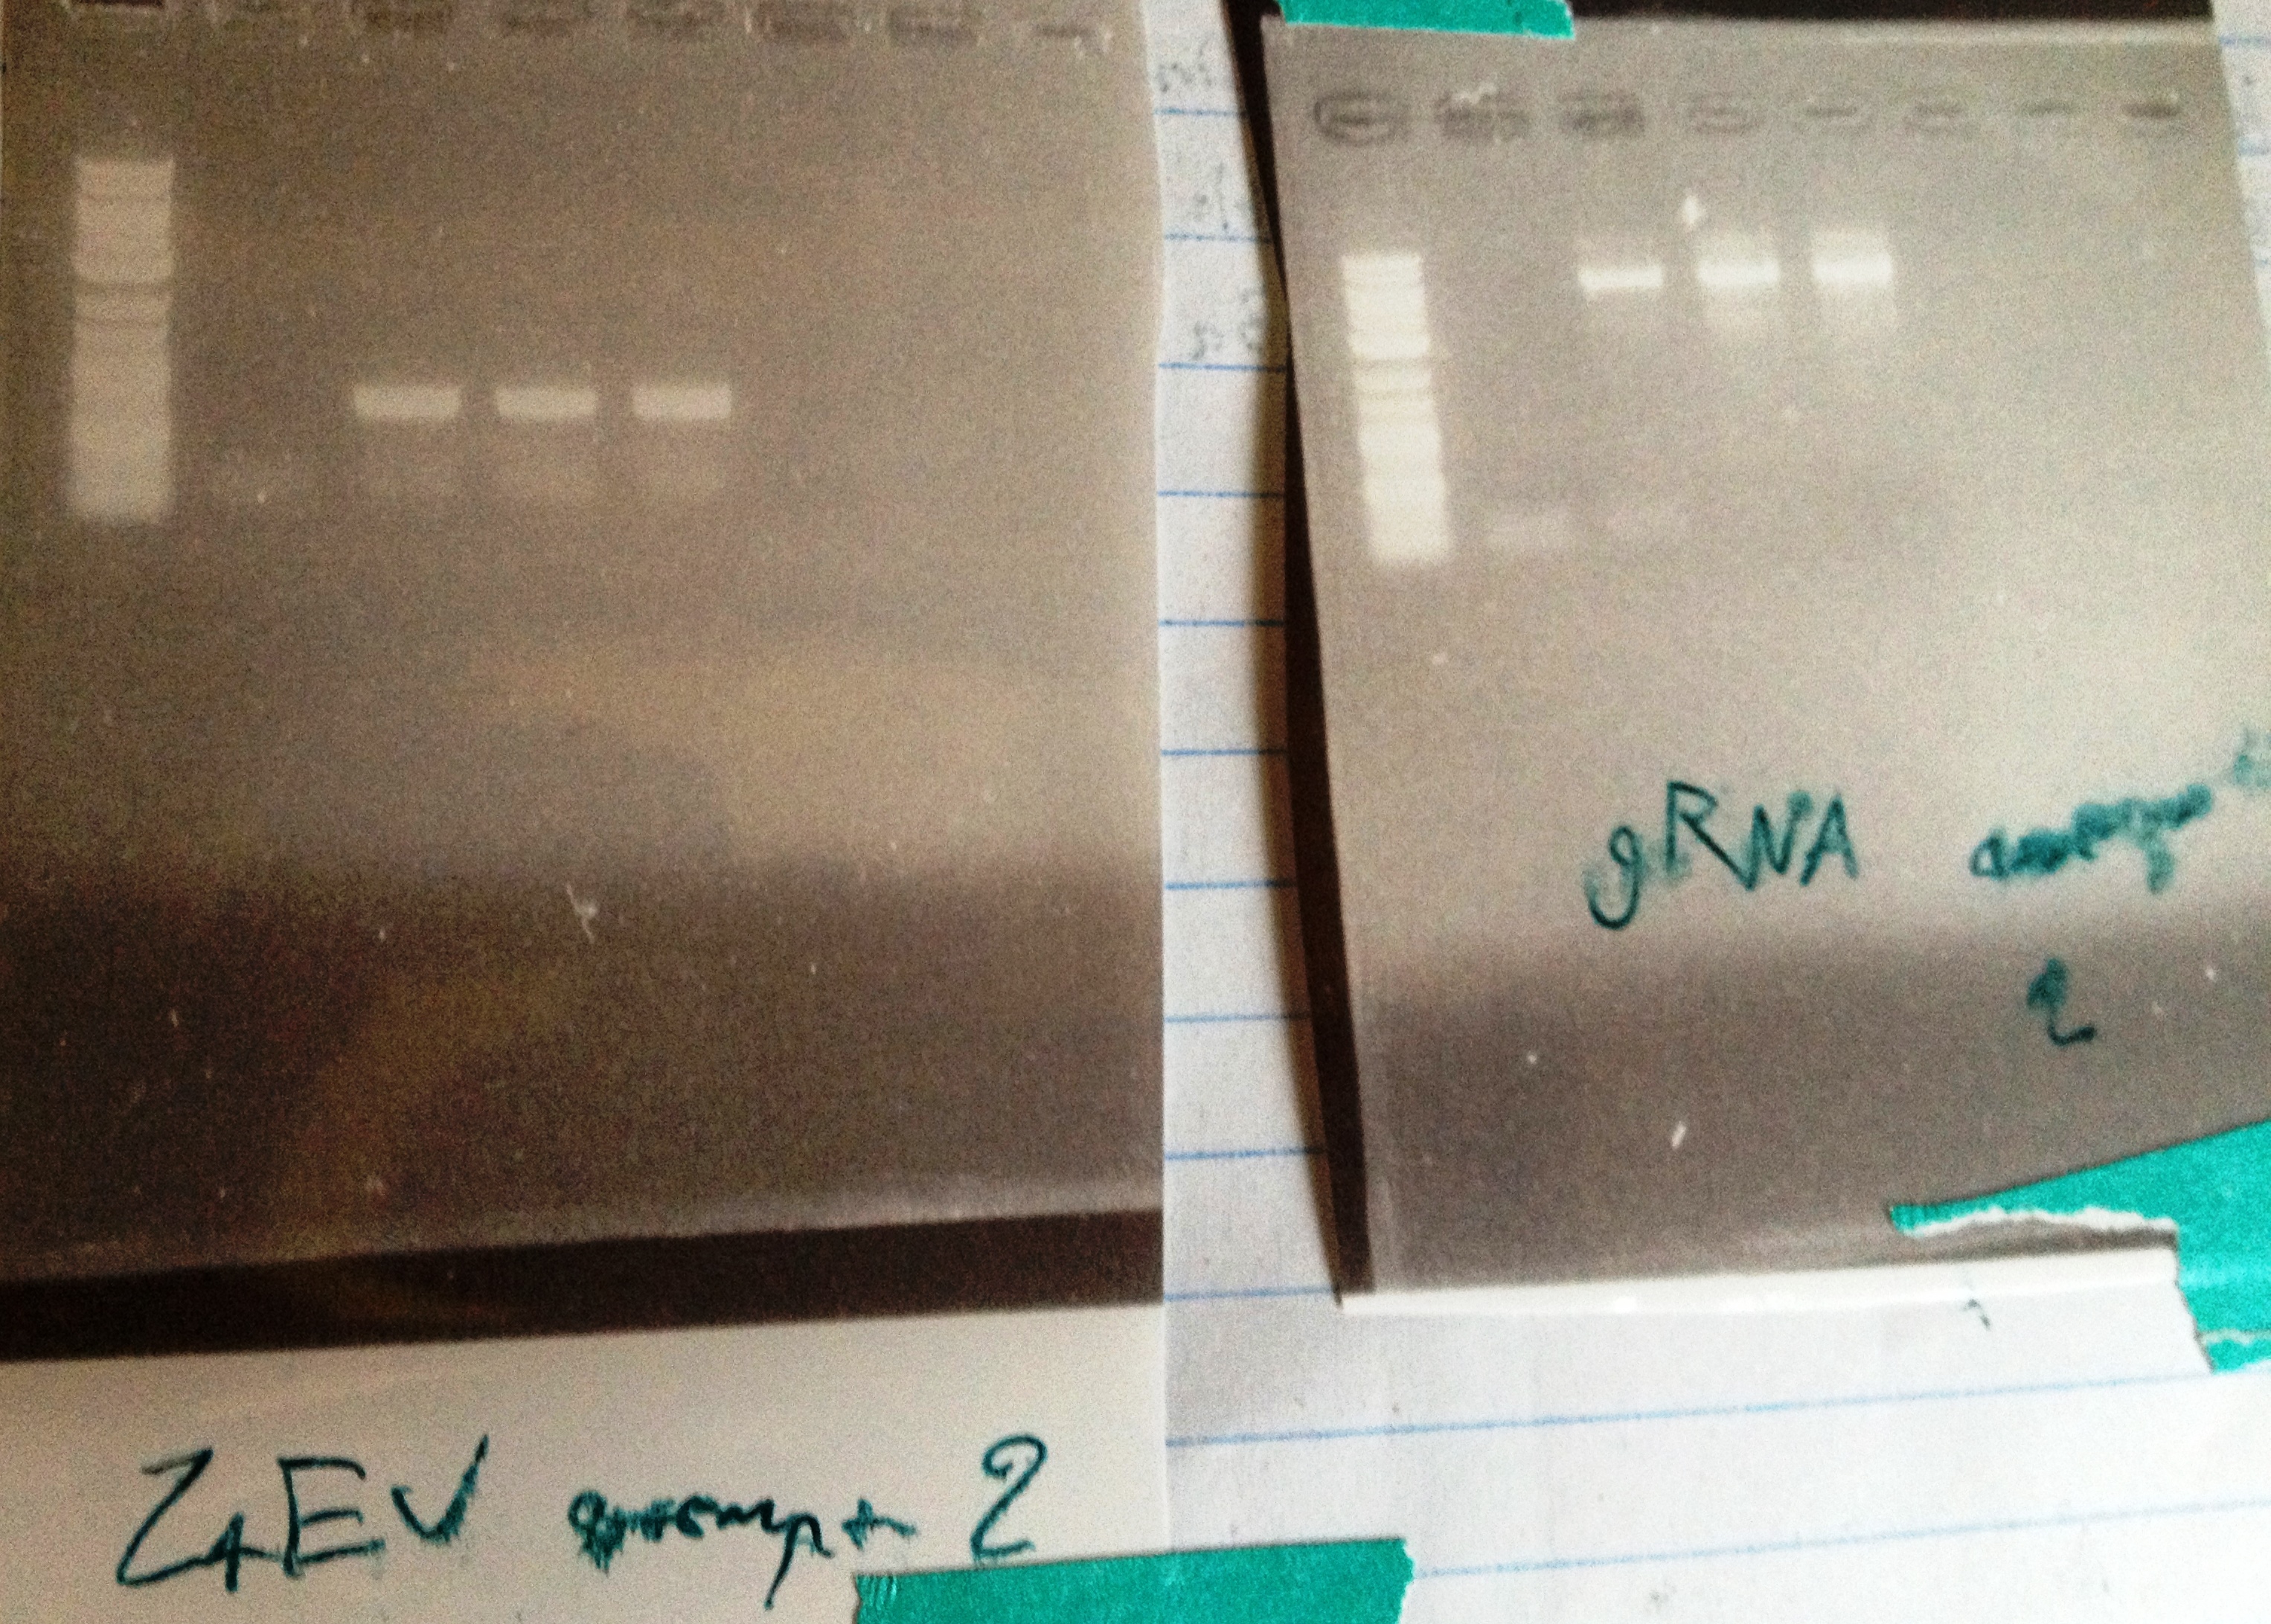 DUKE 5-24-13.PCR Z4EVp-gRNA Att2.jpg